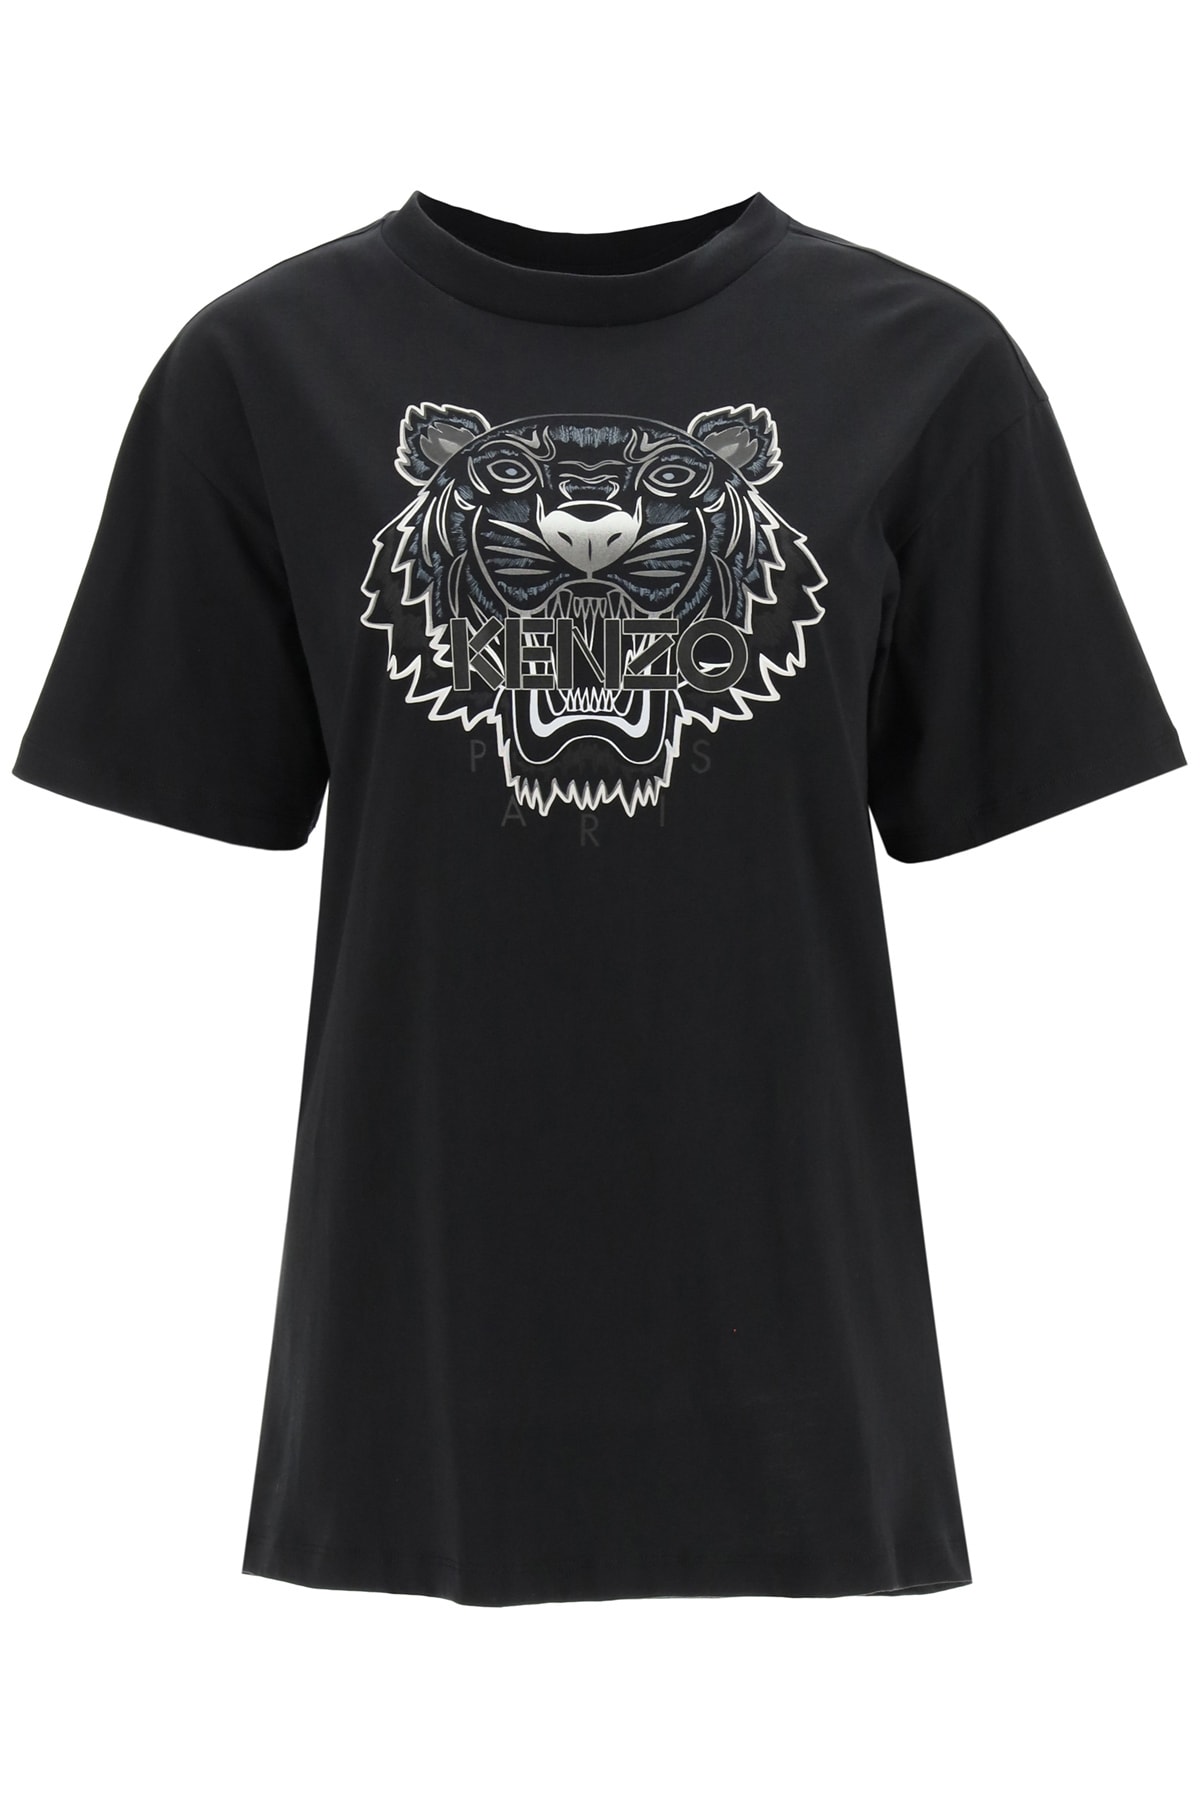 Kenzo Gradient Tiger Print T-shirt